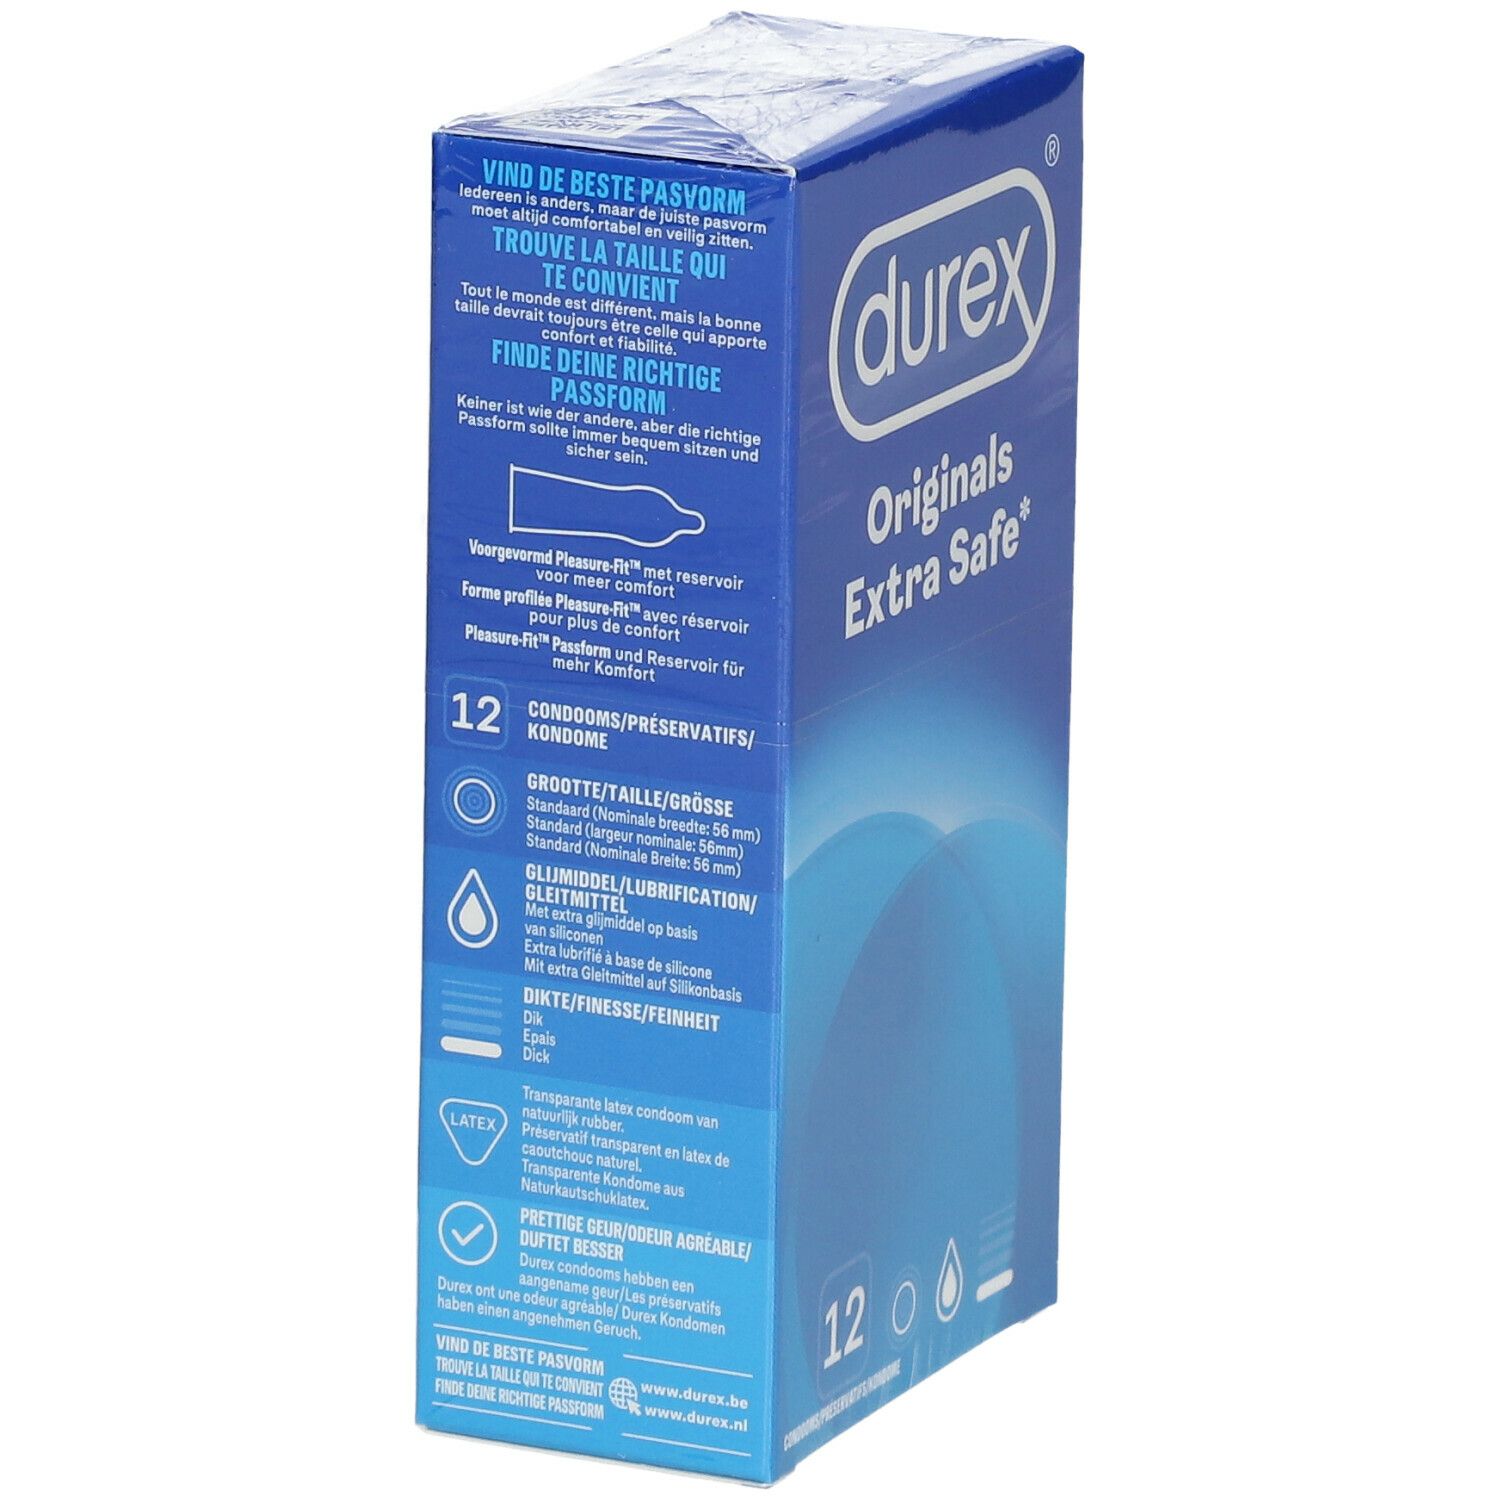 Durex® Préservatifs Extra Safe